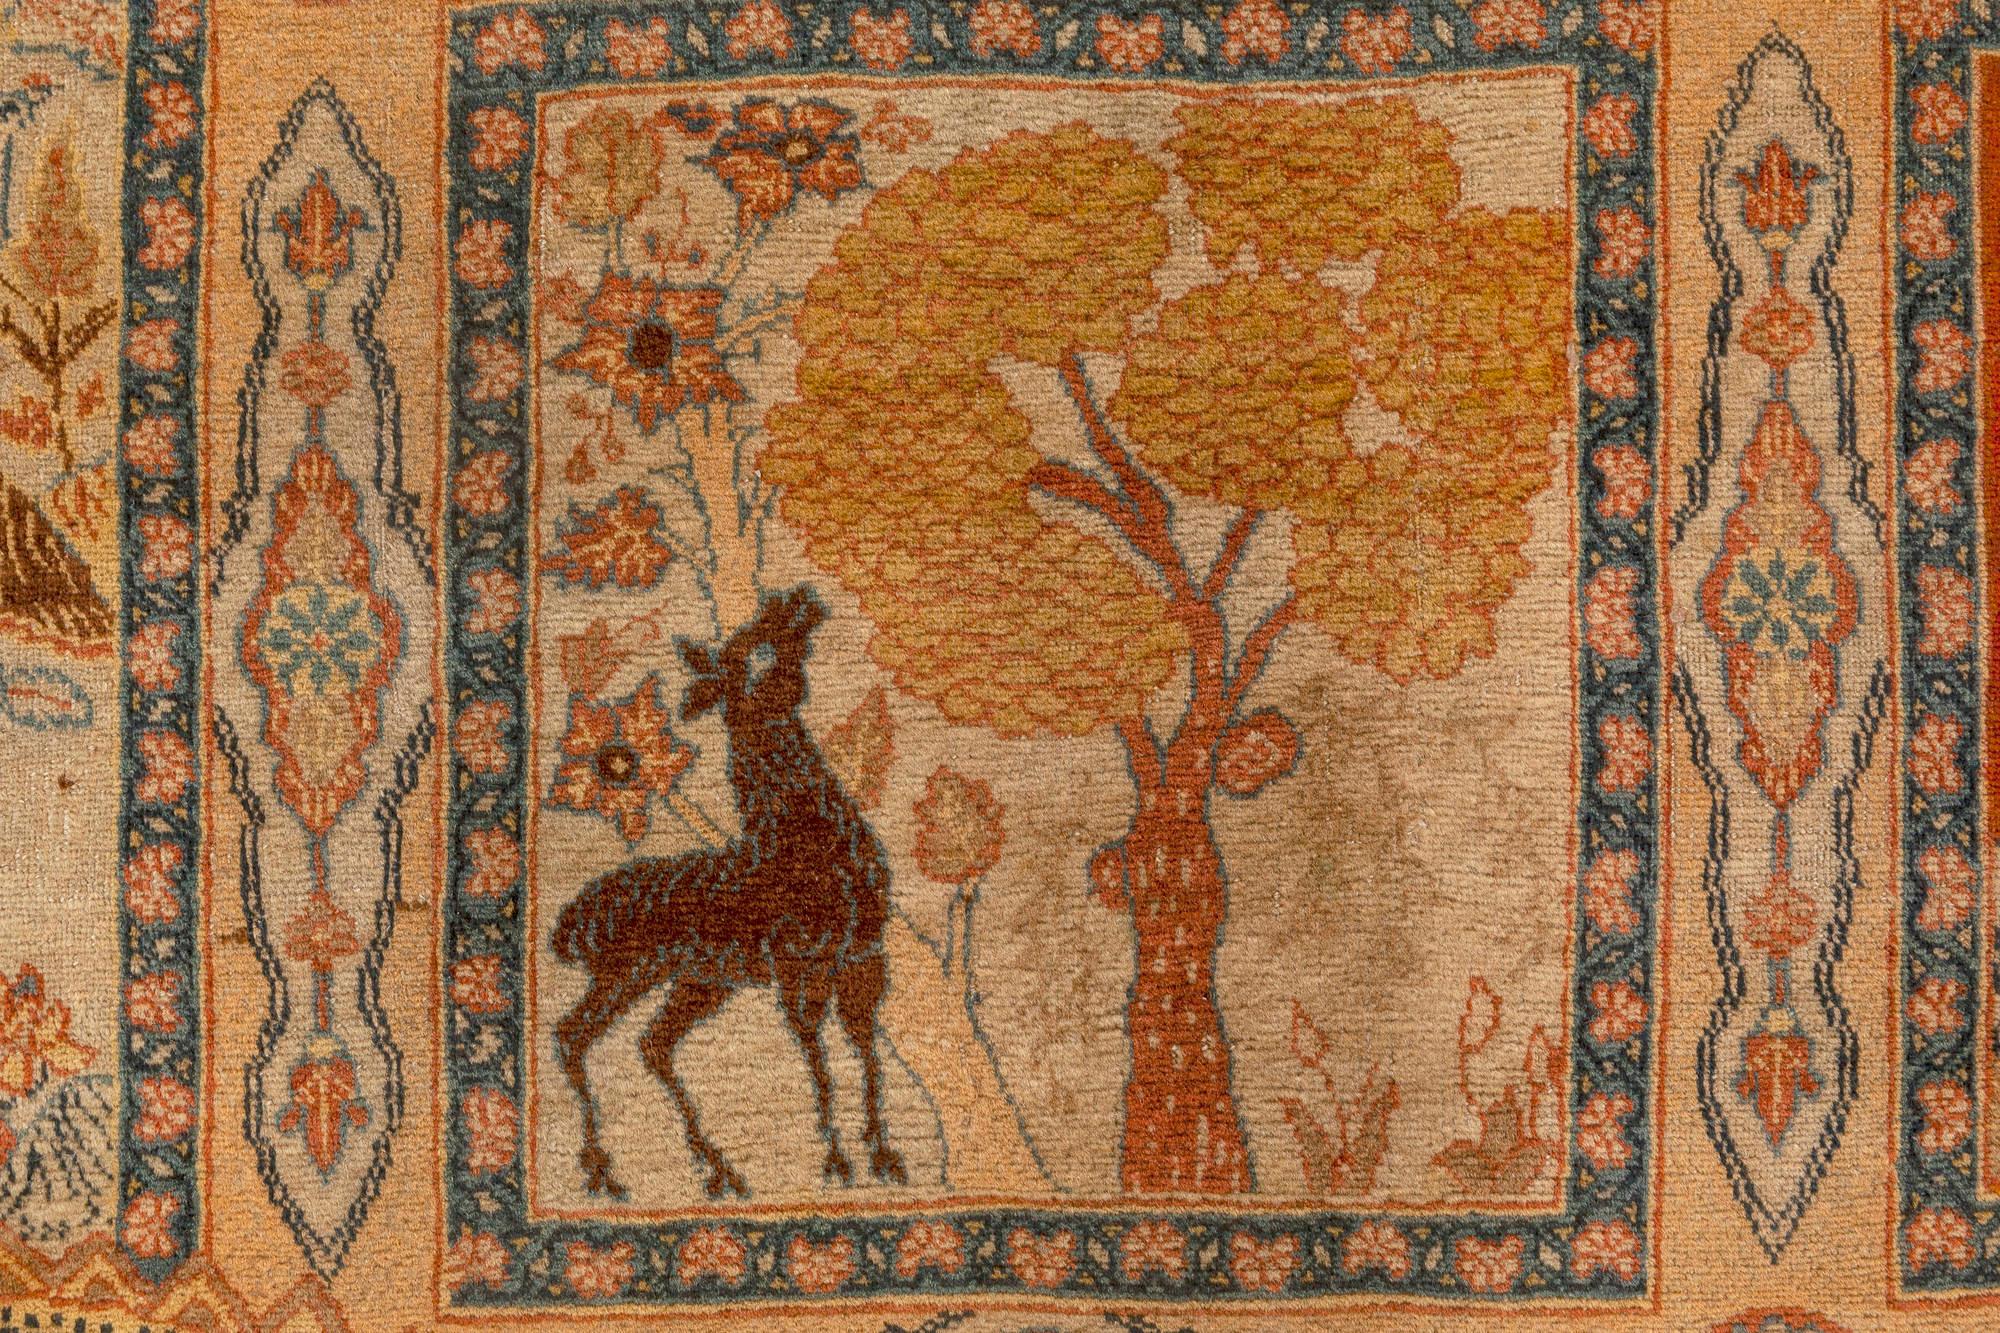 Antique Persian Tabriz handmade wool rug
Size: 10'6